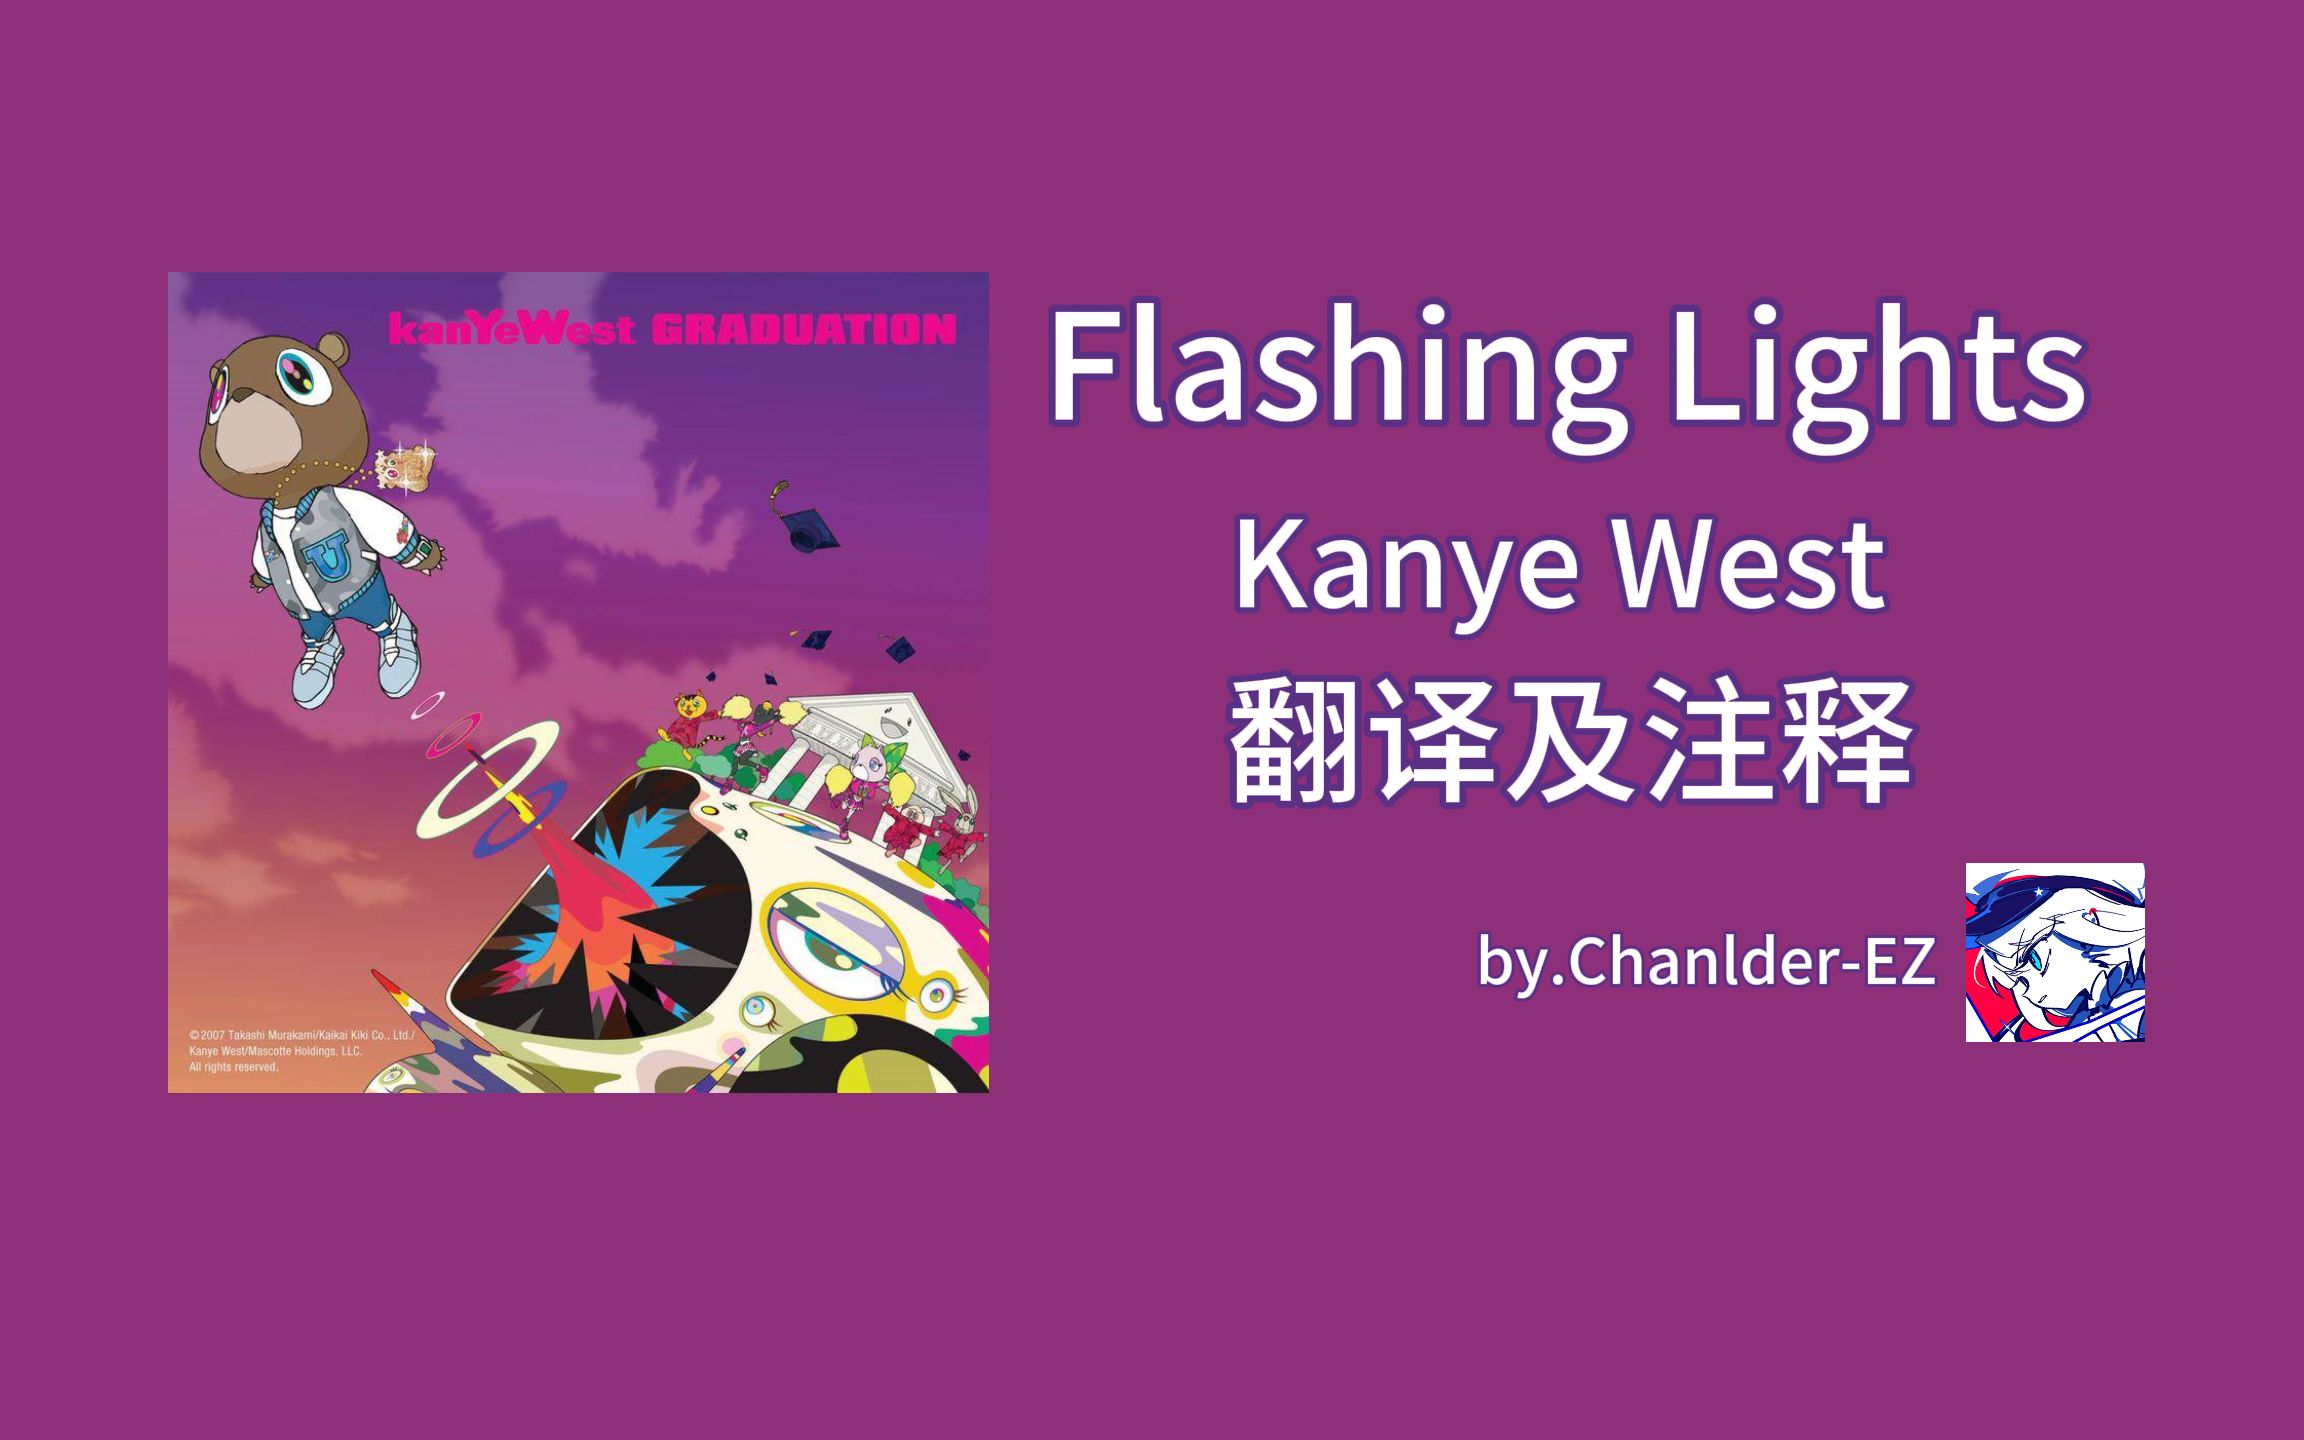 华丽优雅且高级 | Flashing Lights - Kanye West 翻译及注释